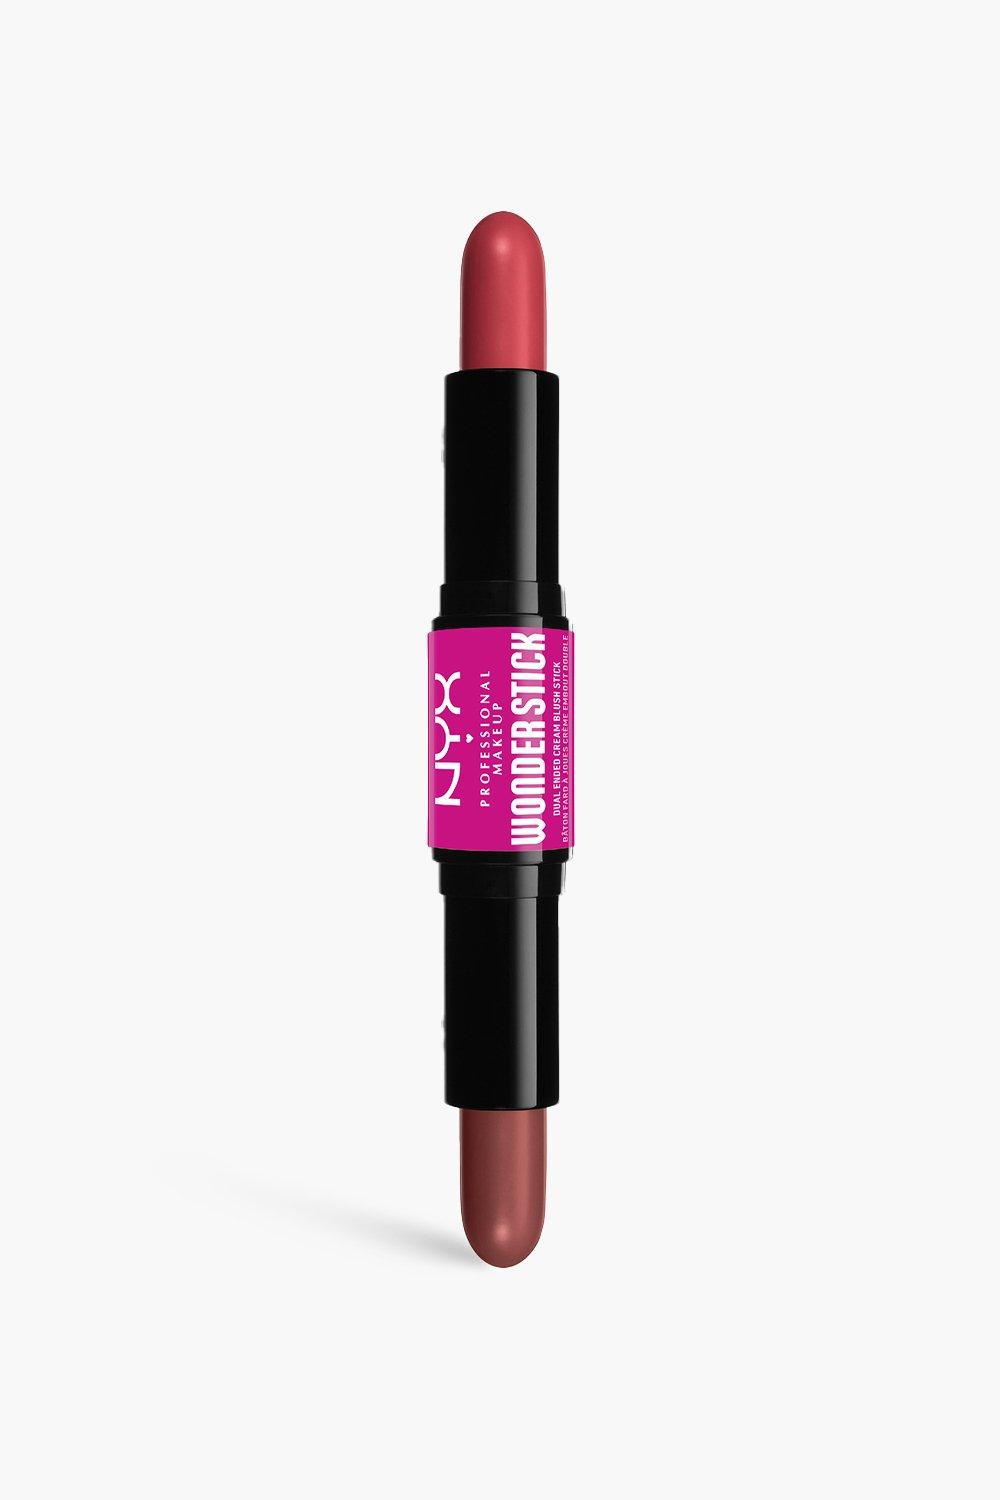 Nyx Professional Makeup Wonder Stick Blush, Coral + Deep Peach